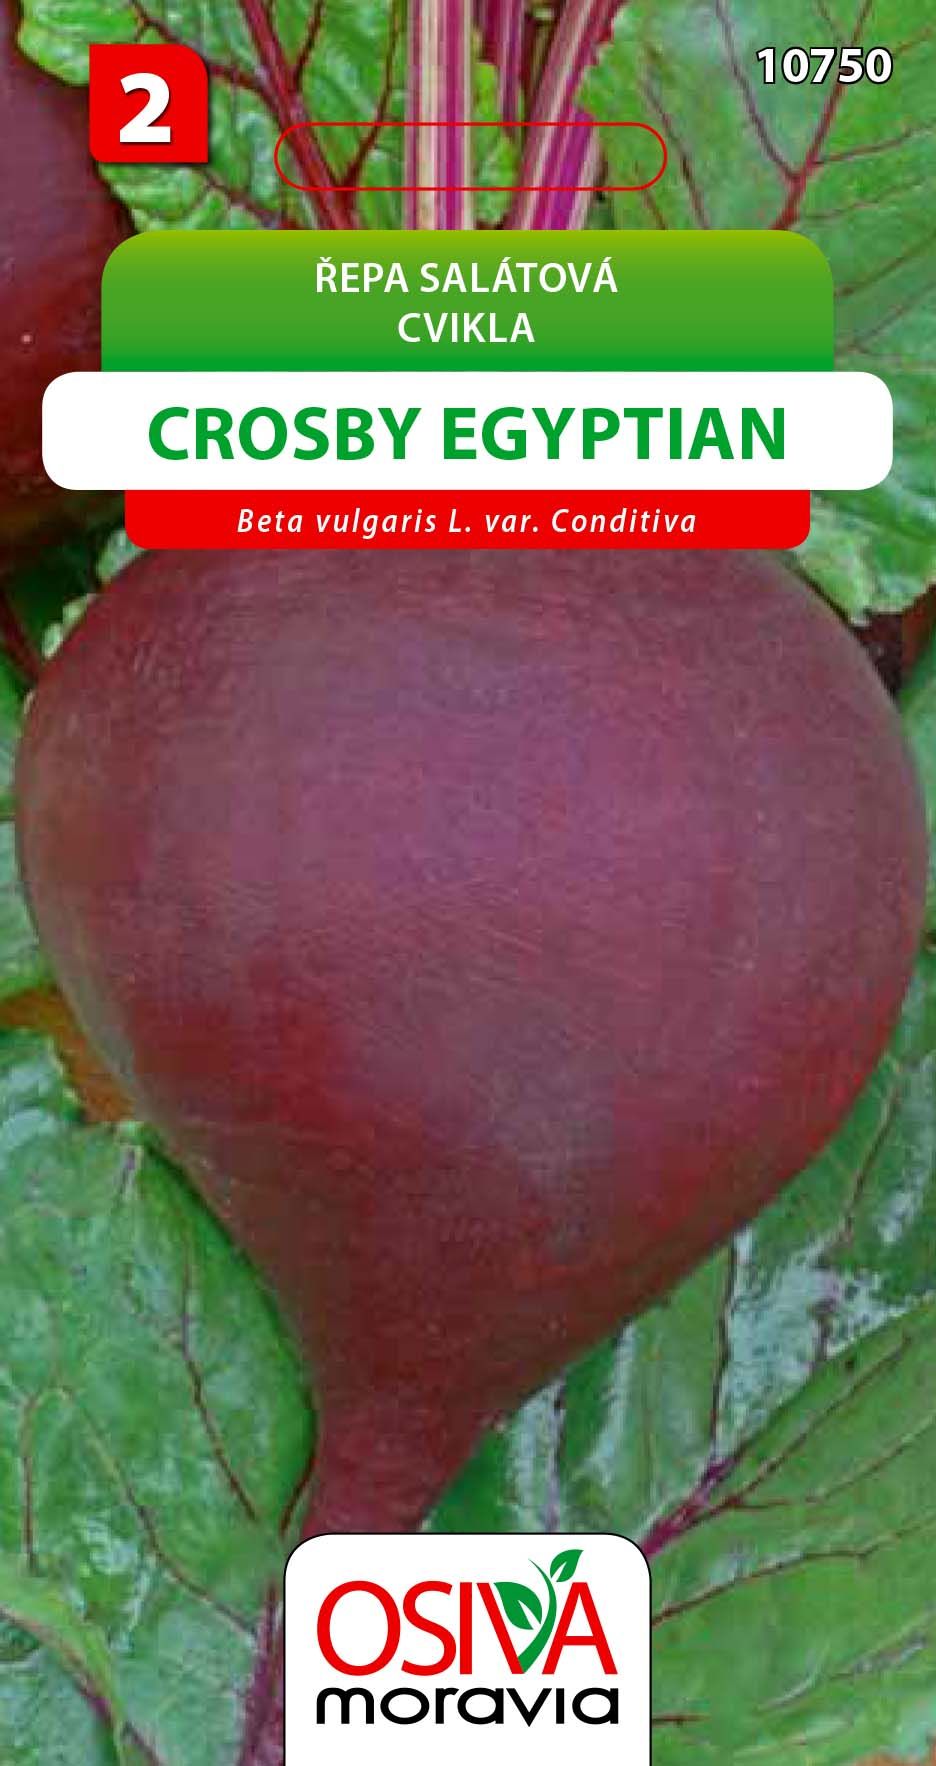 Řepa salátová - Crosby Egyptian